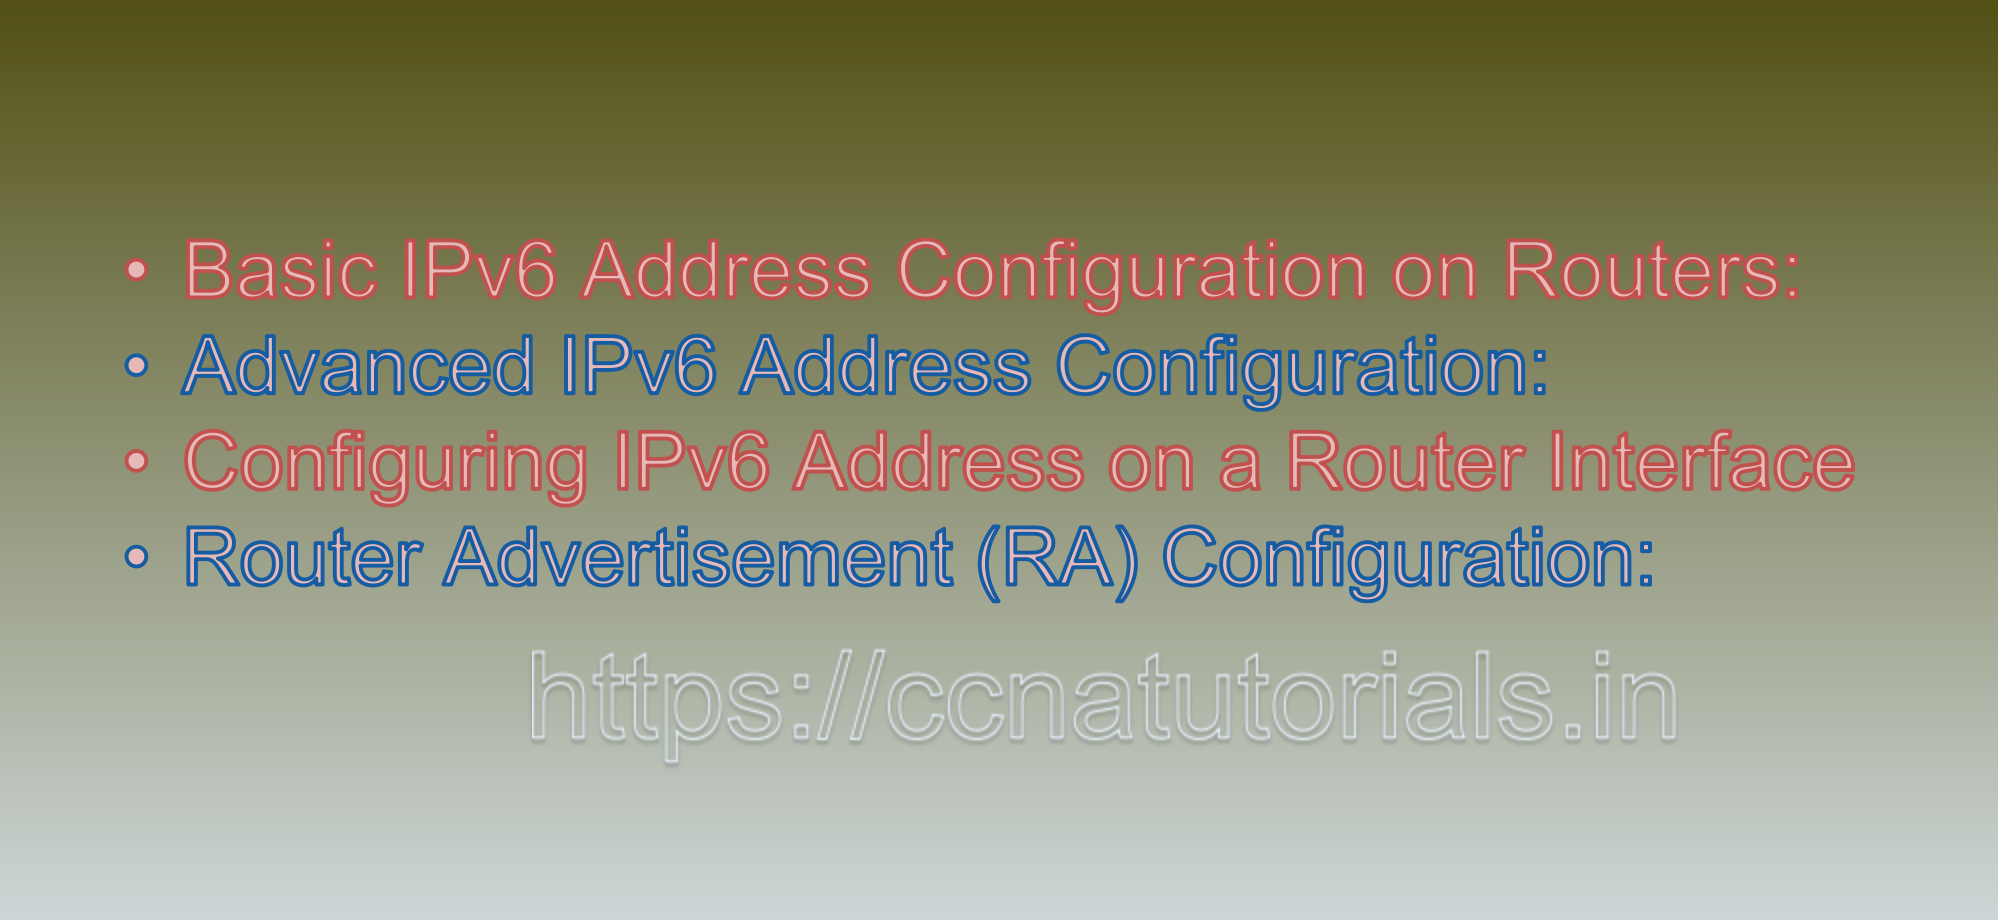 IPv6 Address Configuration on Routers, ccna, ccnatutorials